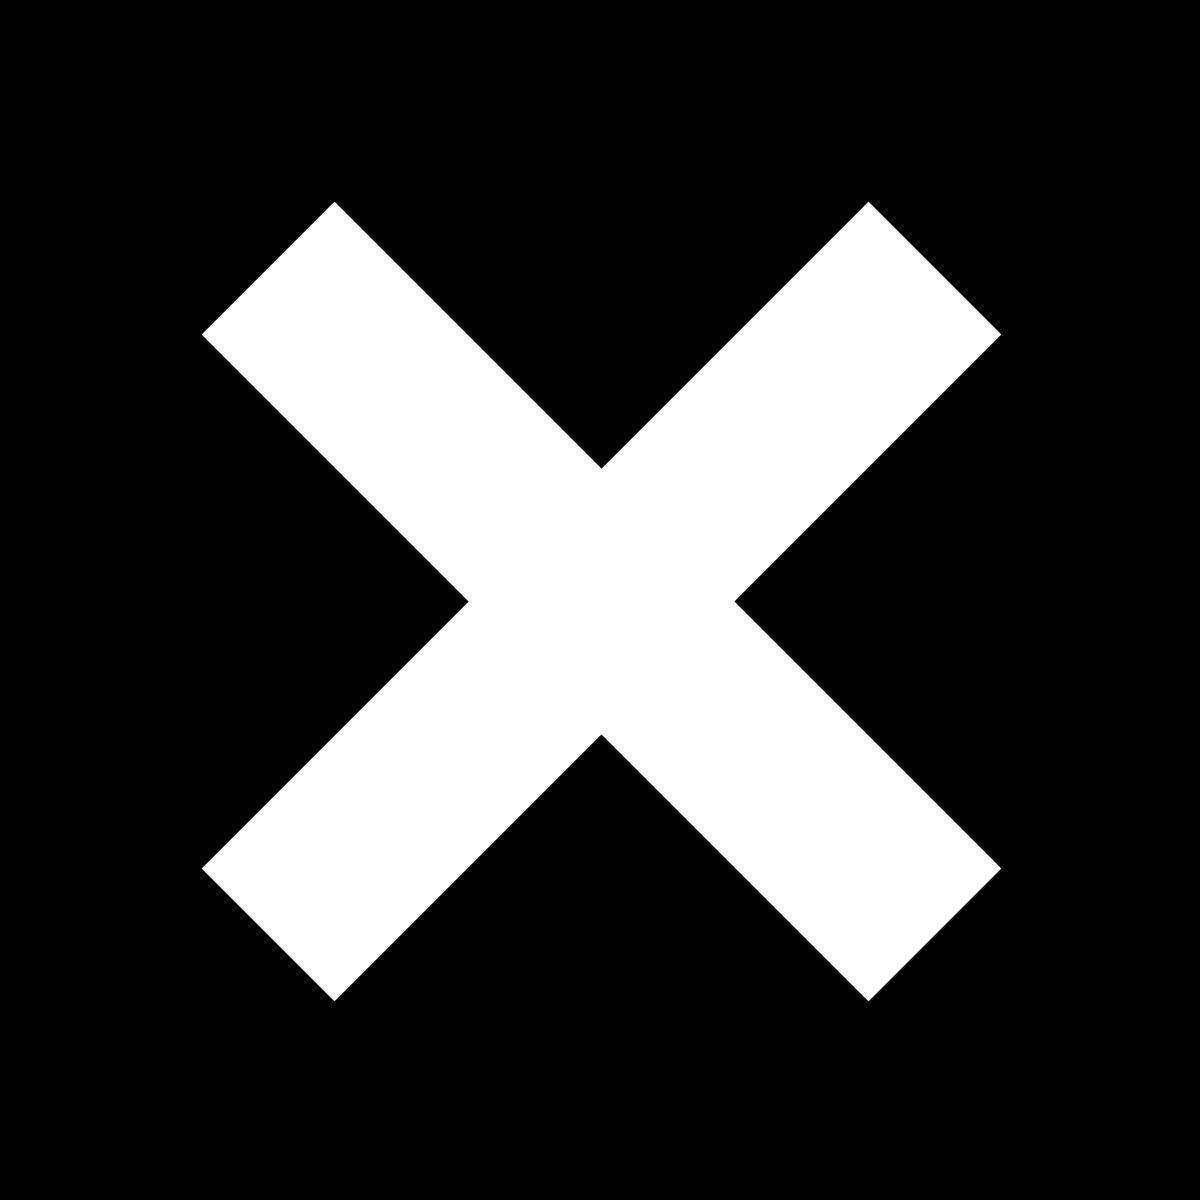 Their first album, 'xx'